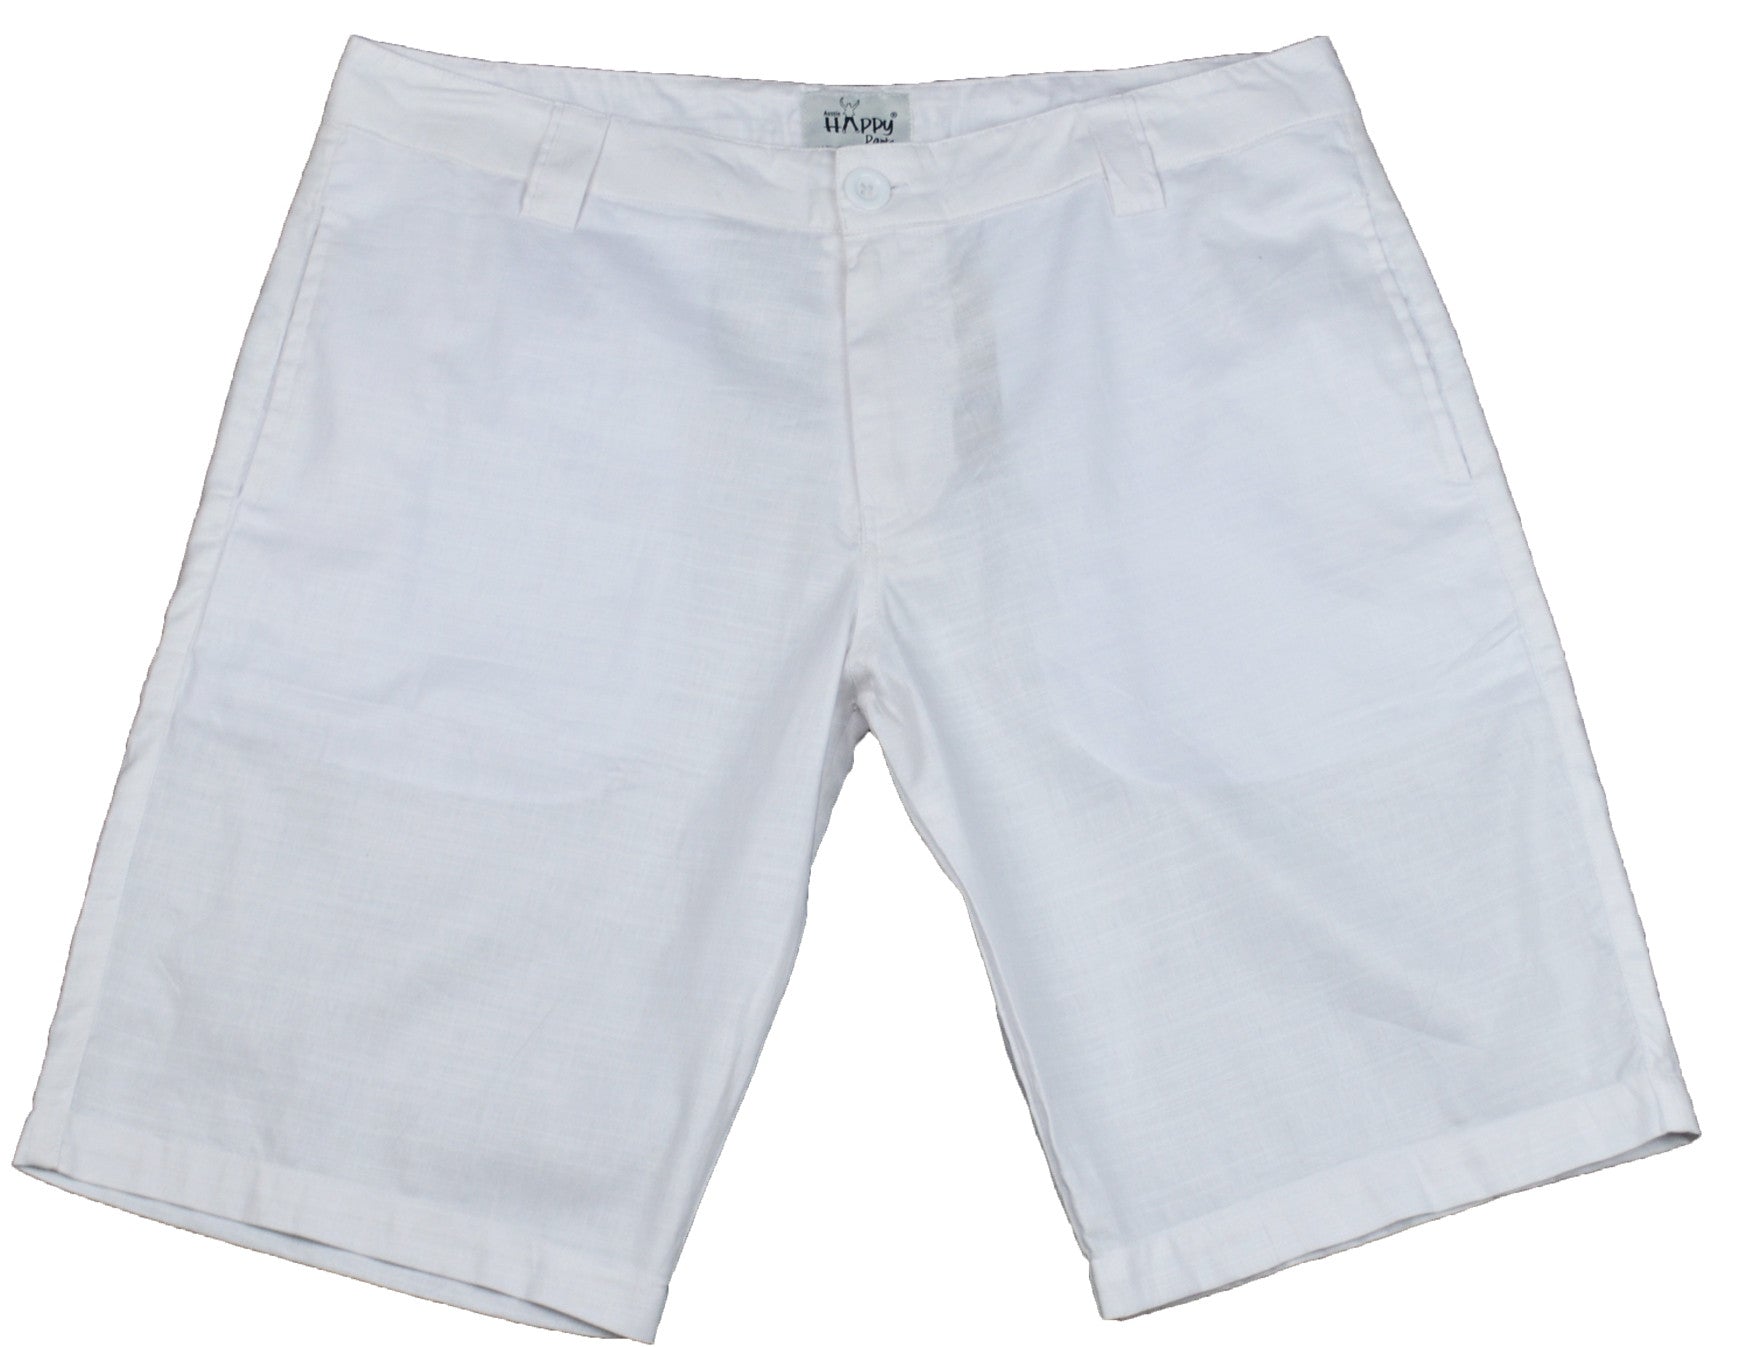 White Cotton Shorts - Happy Pants